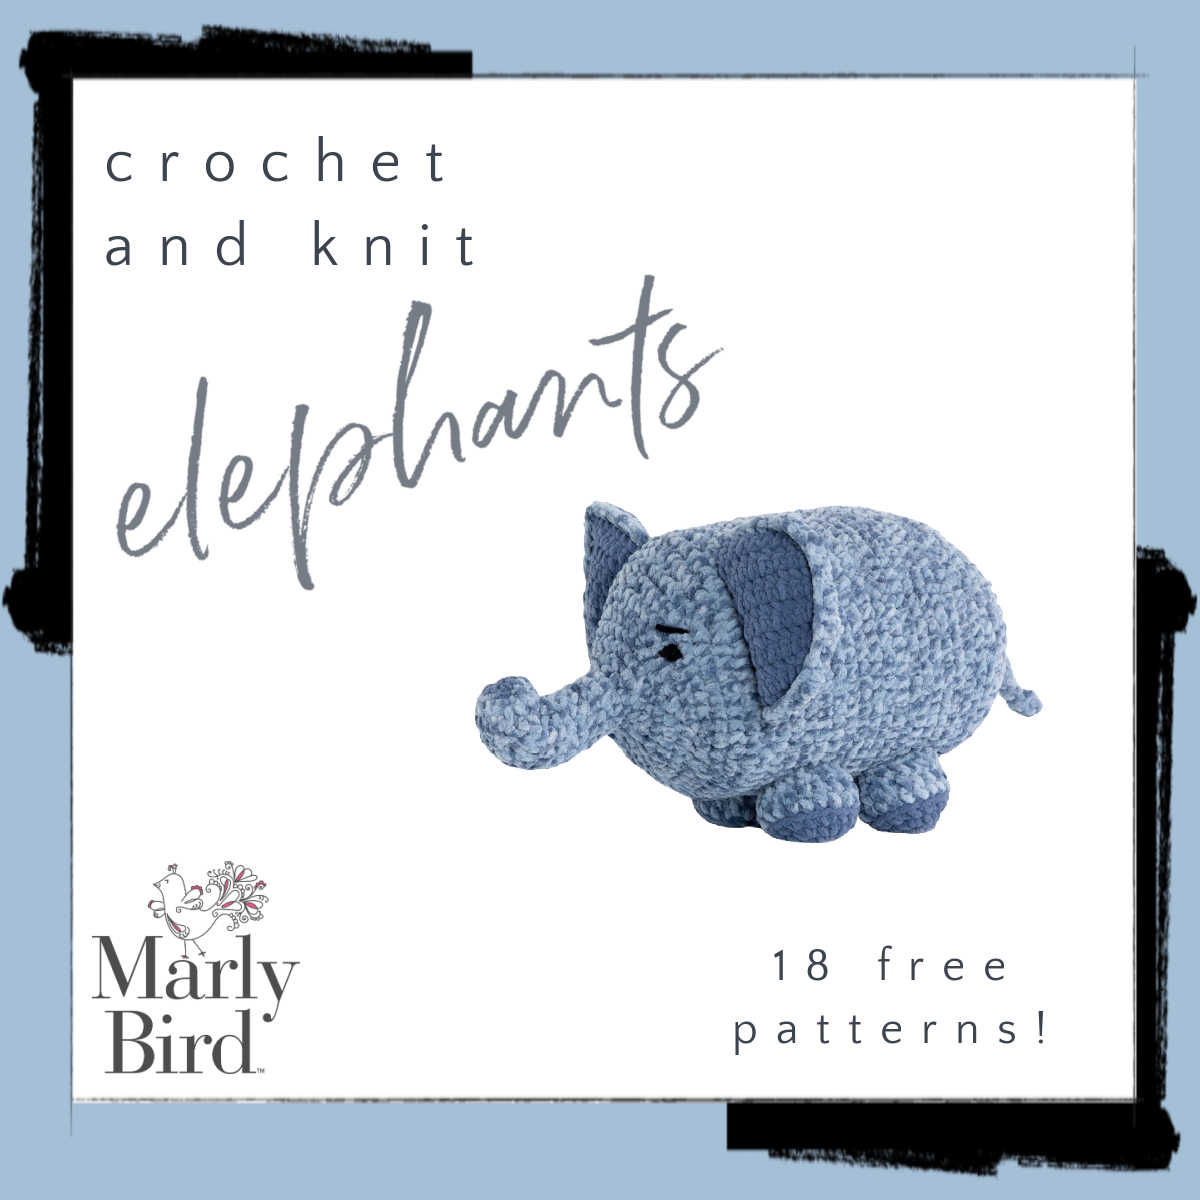 Knit and crochet elephant patterns - Marly Bird